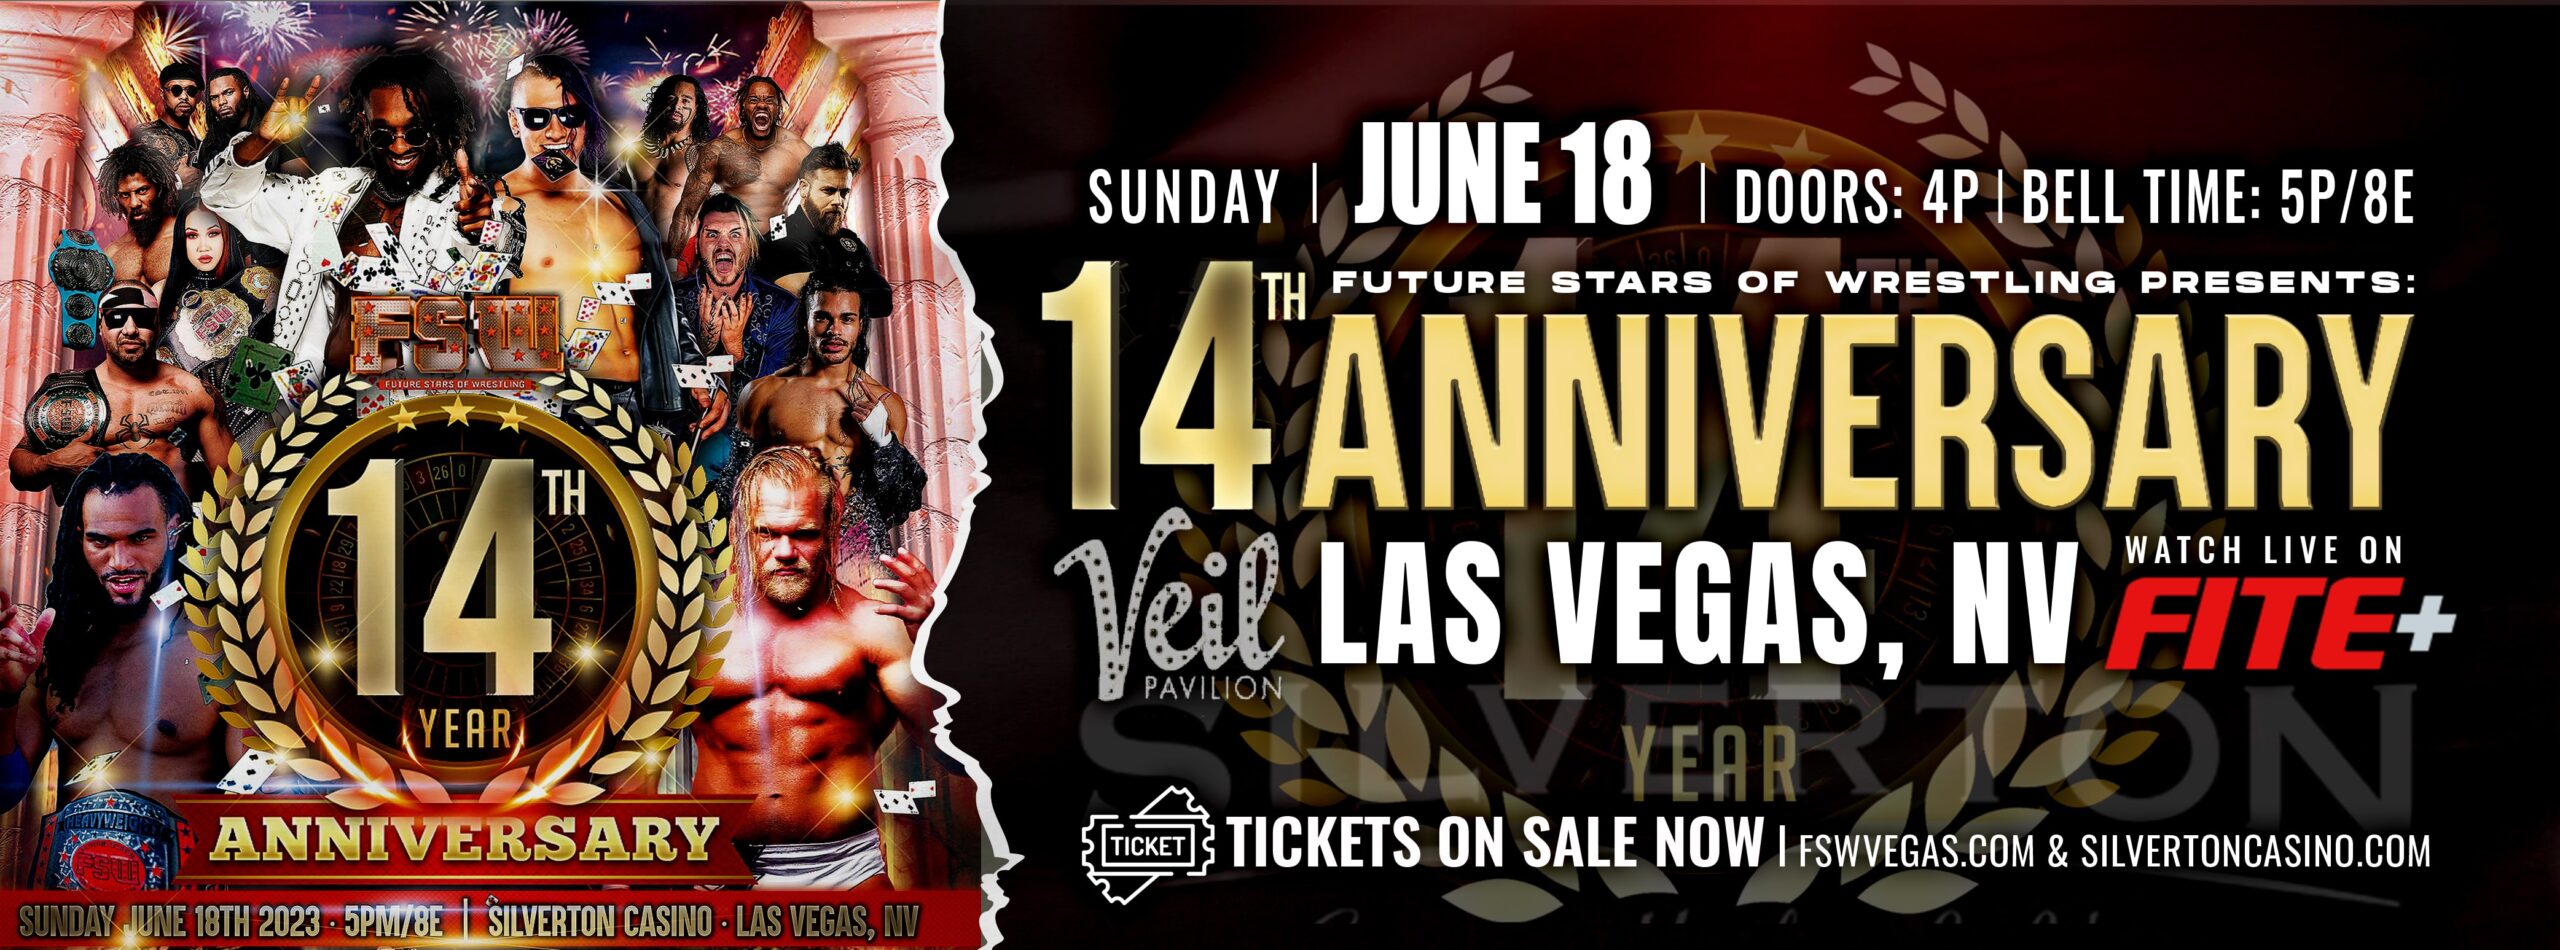 FSW 14 Year Anniversary June 18 2023 Veil Pavillion Silverton Casino Las Vegas NV